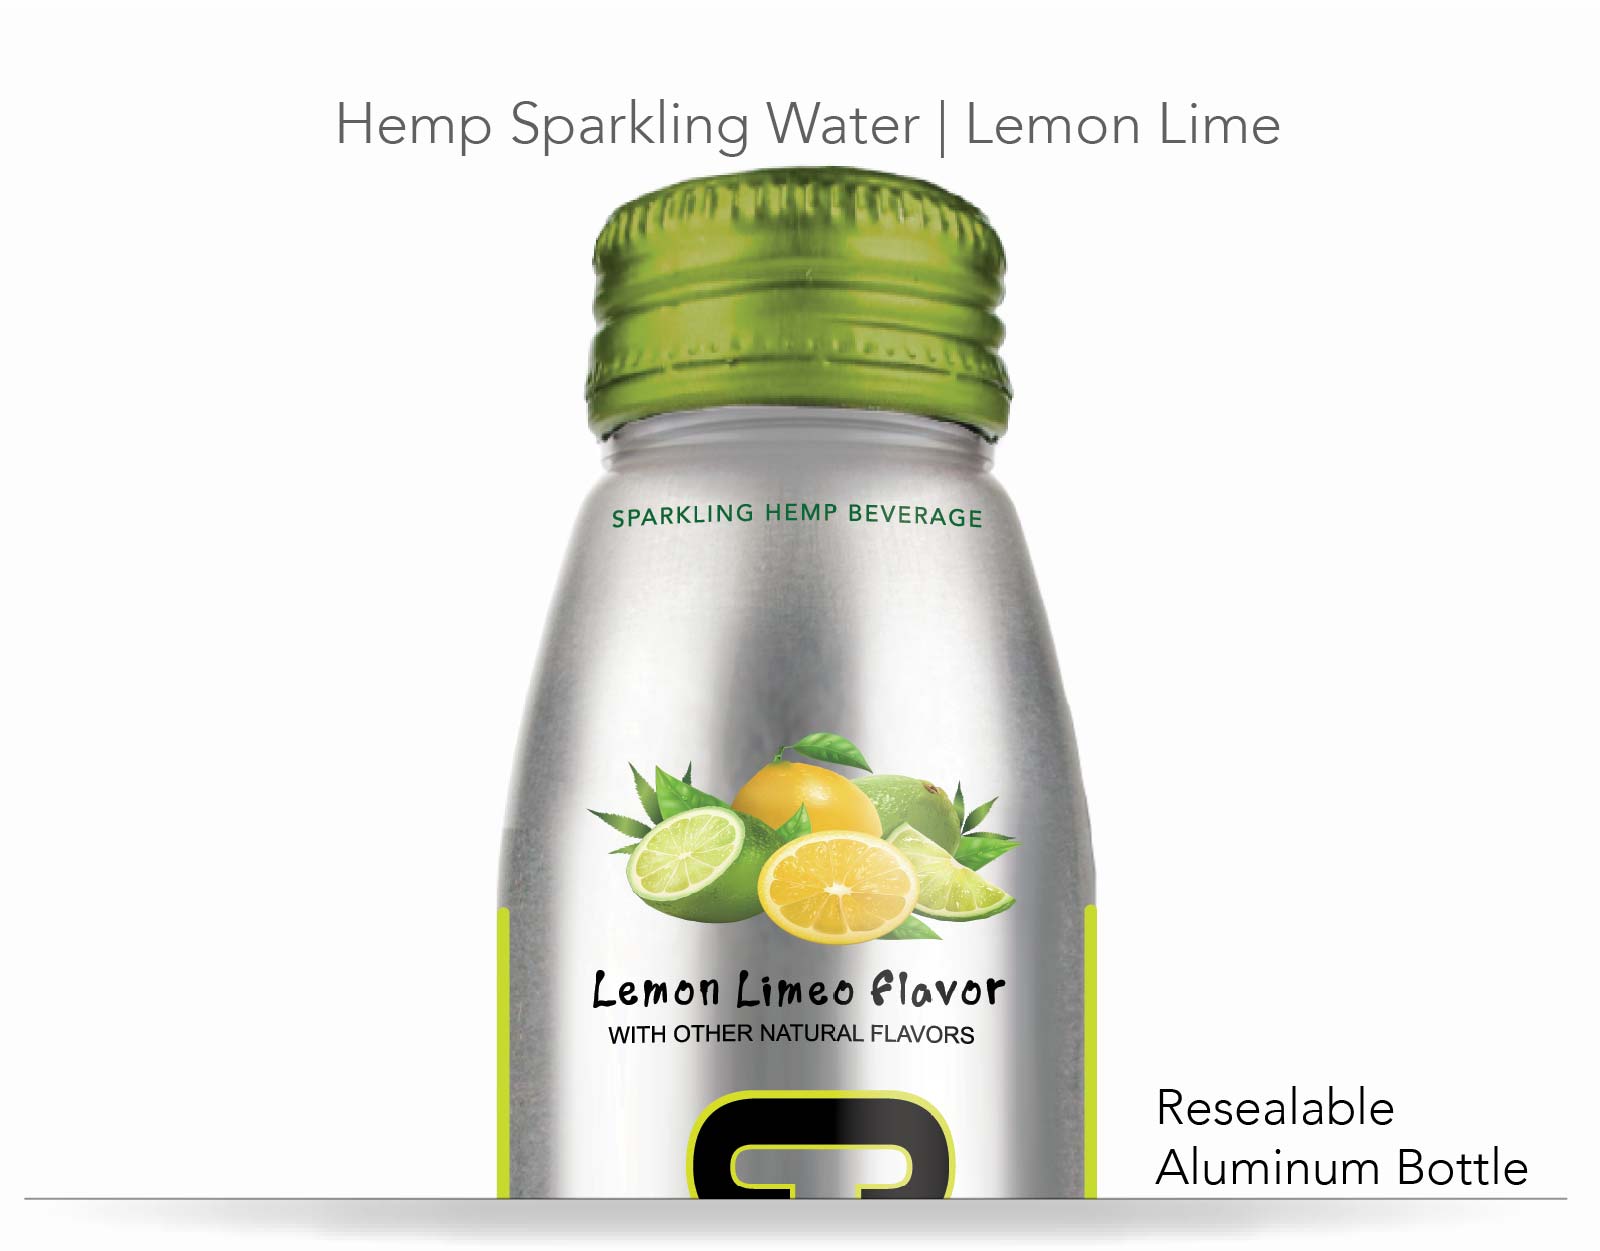 Sparkling Hemp Water | Lemon Lime